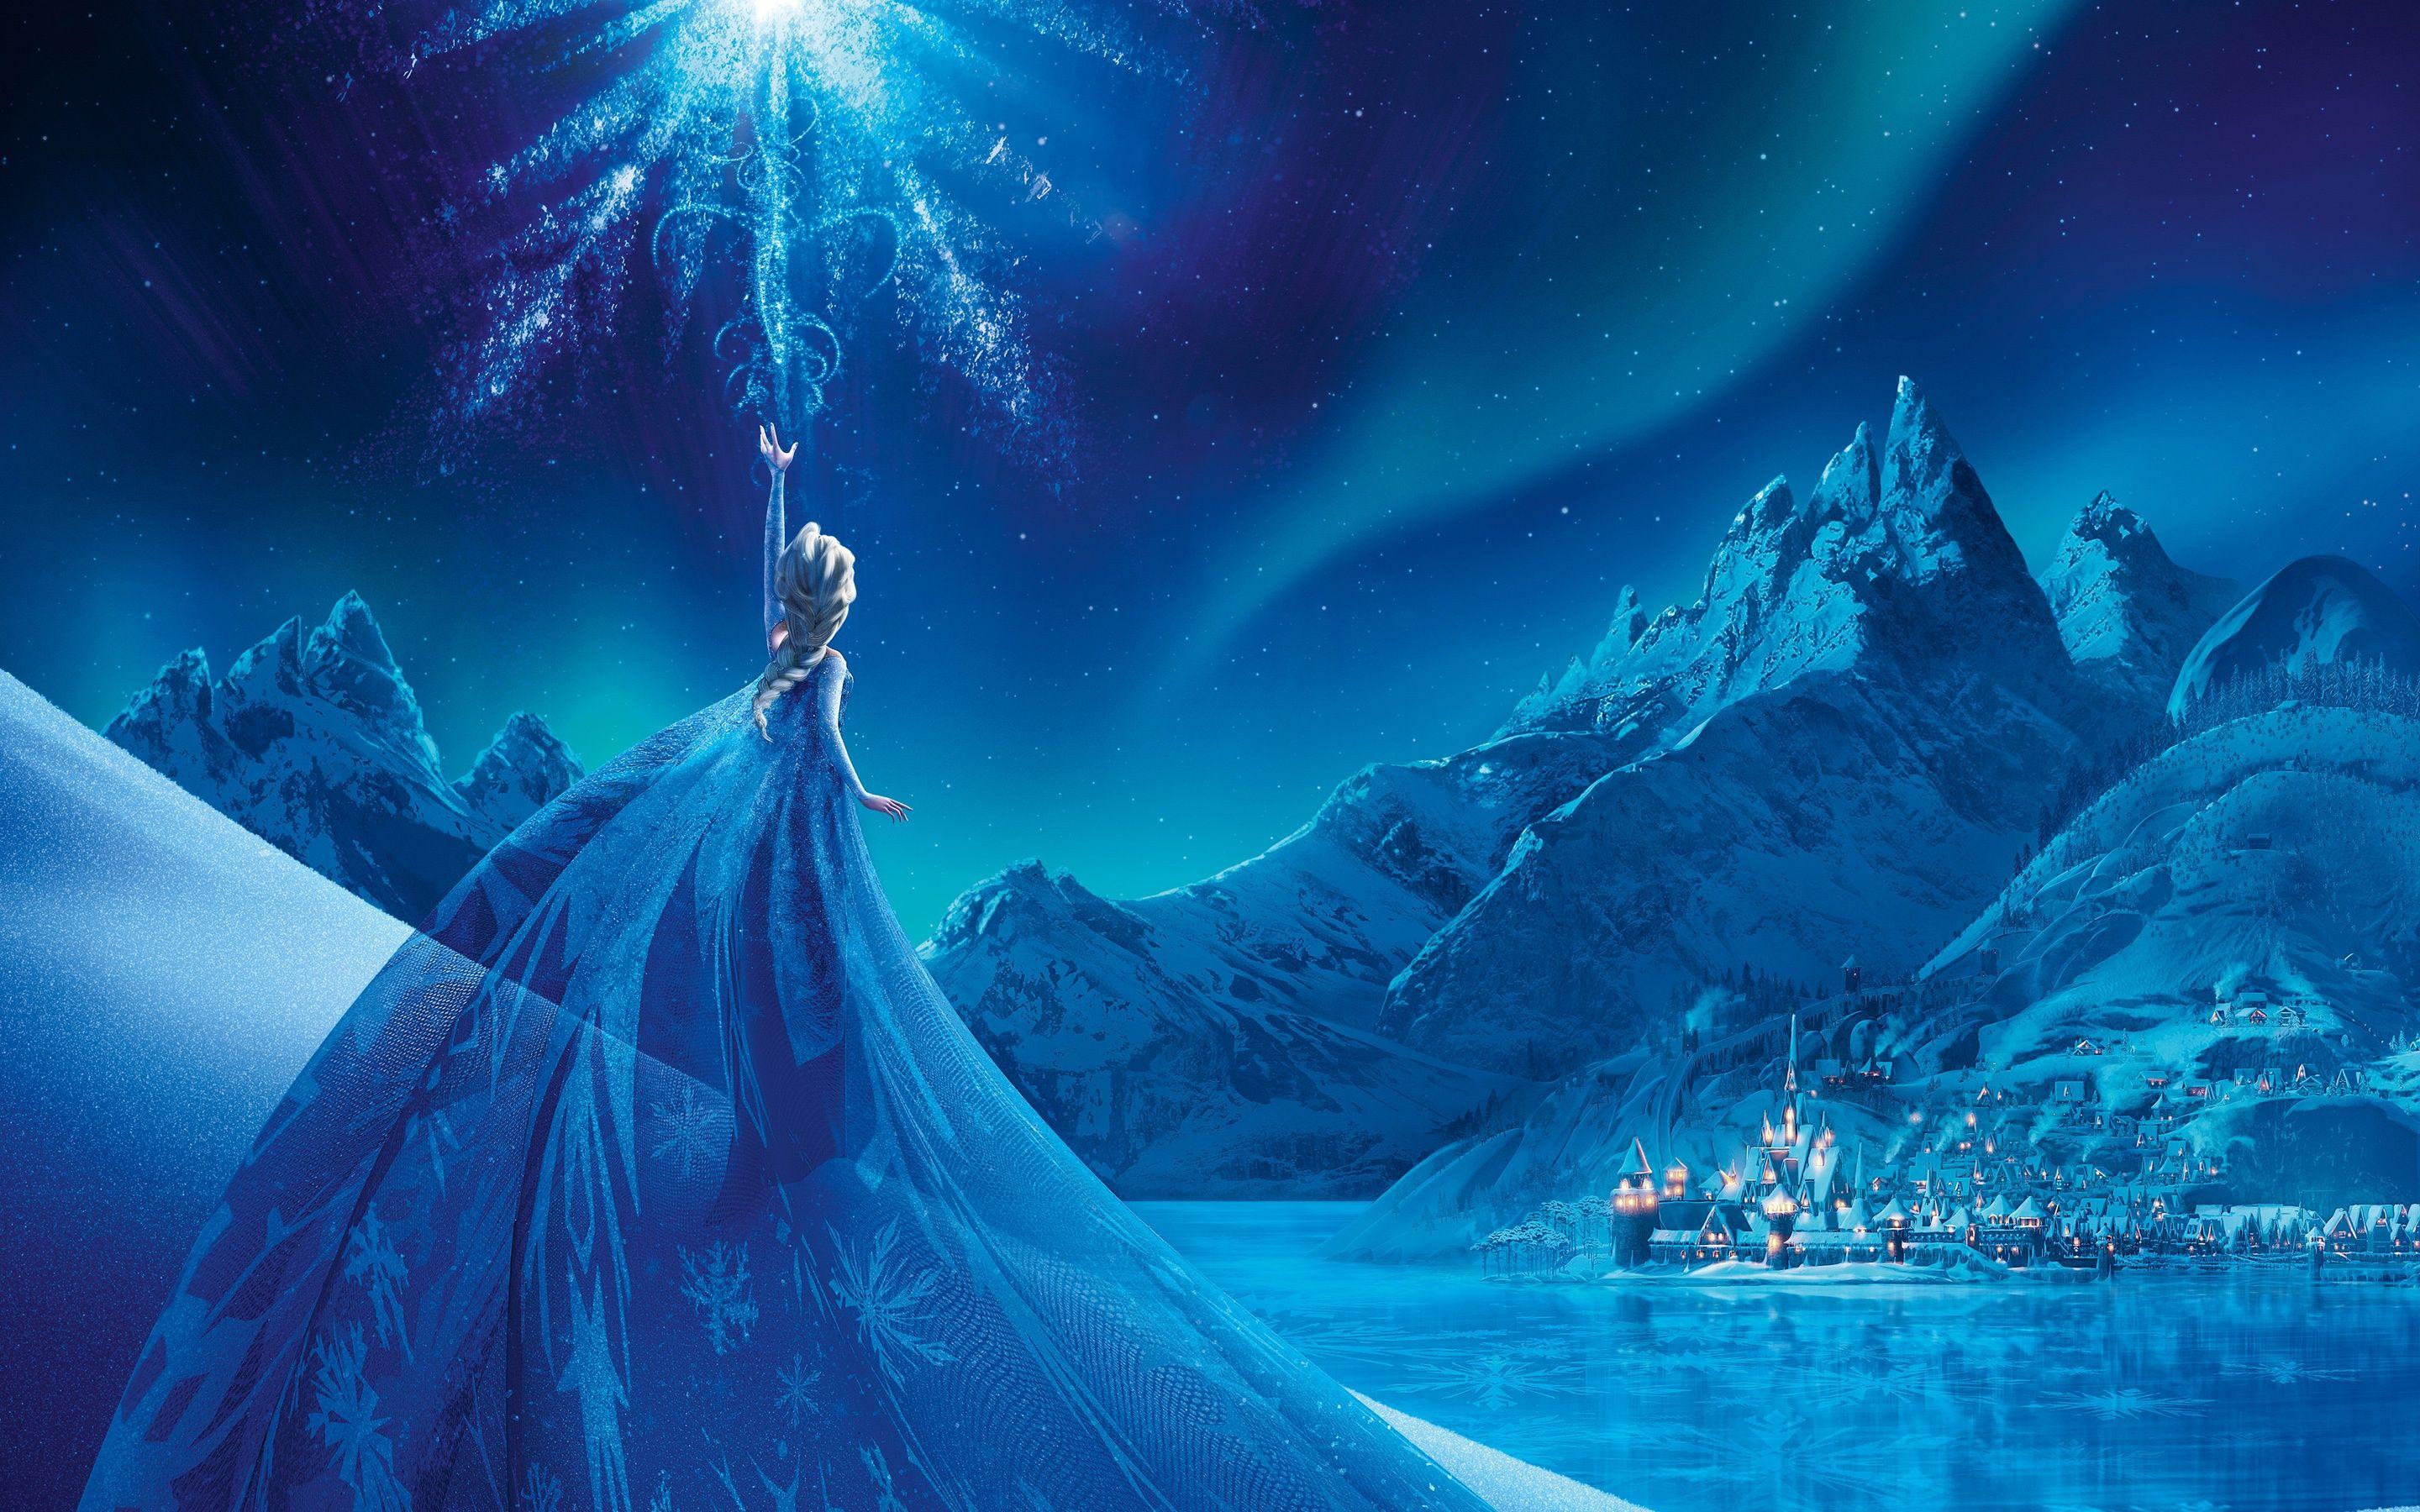 Frozen Elsa Wallpaper Background 49146 2880x1800 px